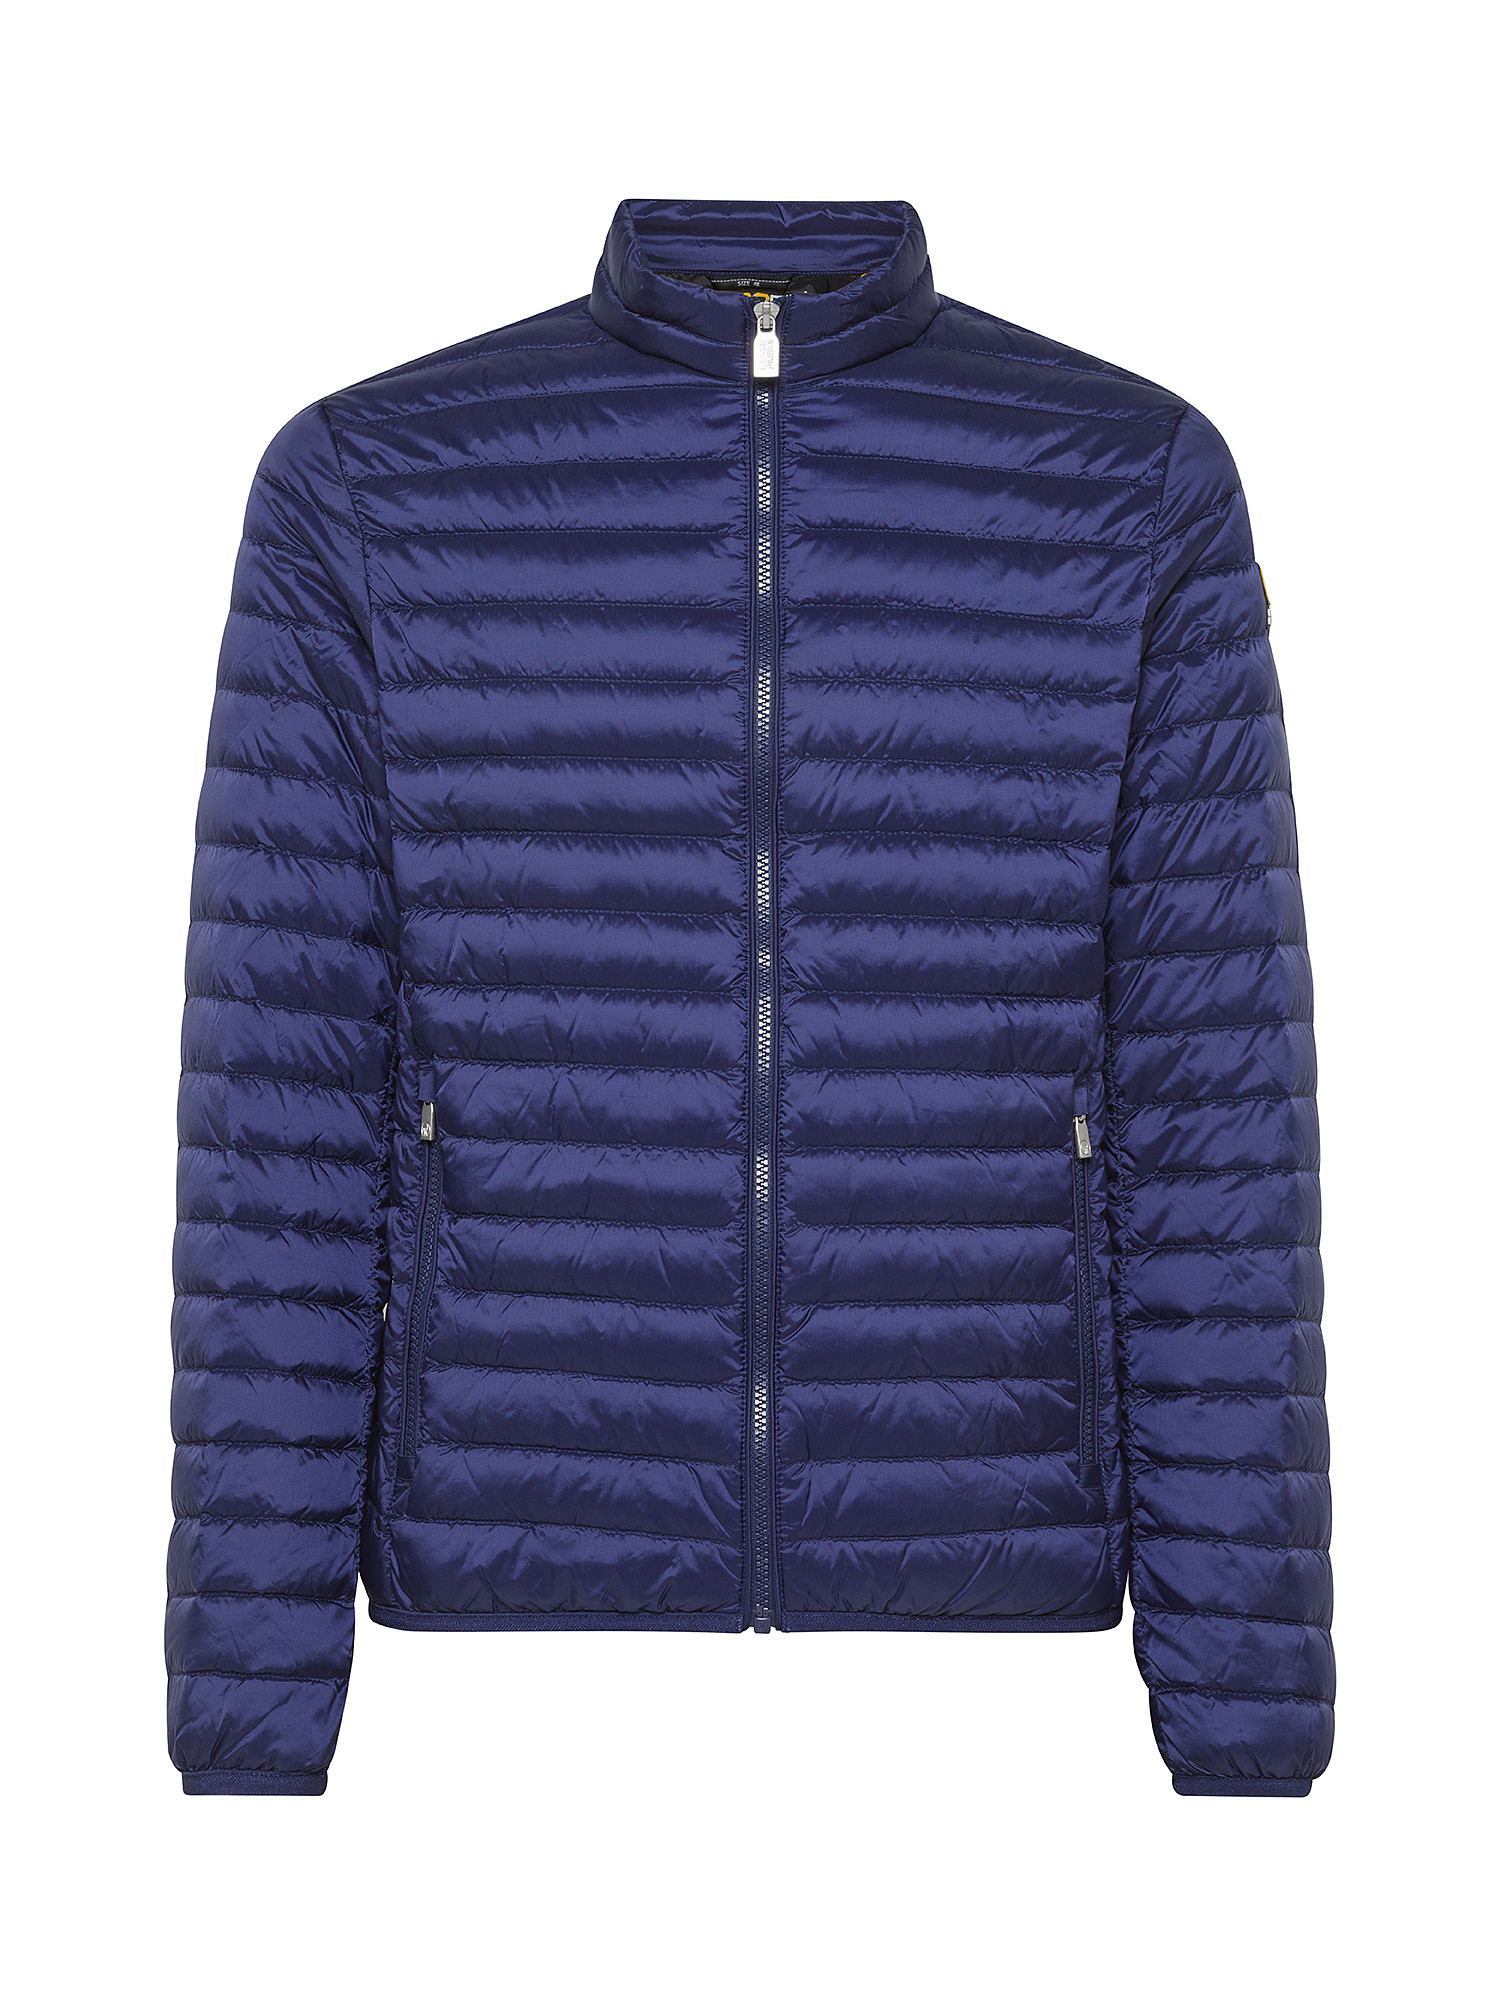 Ciesse Piumini - Jason down jacket in nylon, Blue, large image number 0